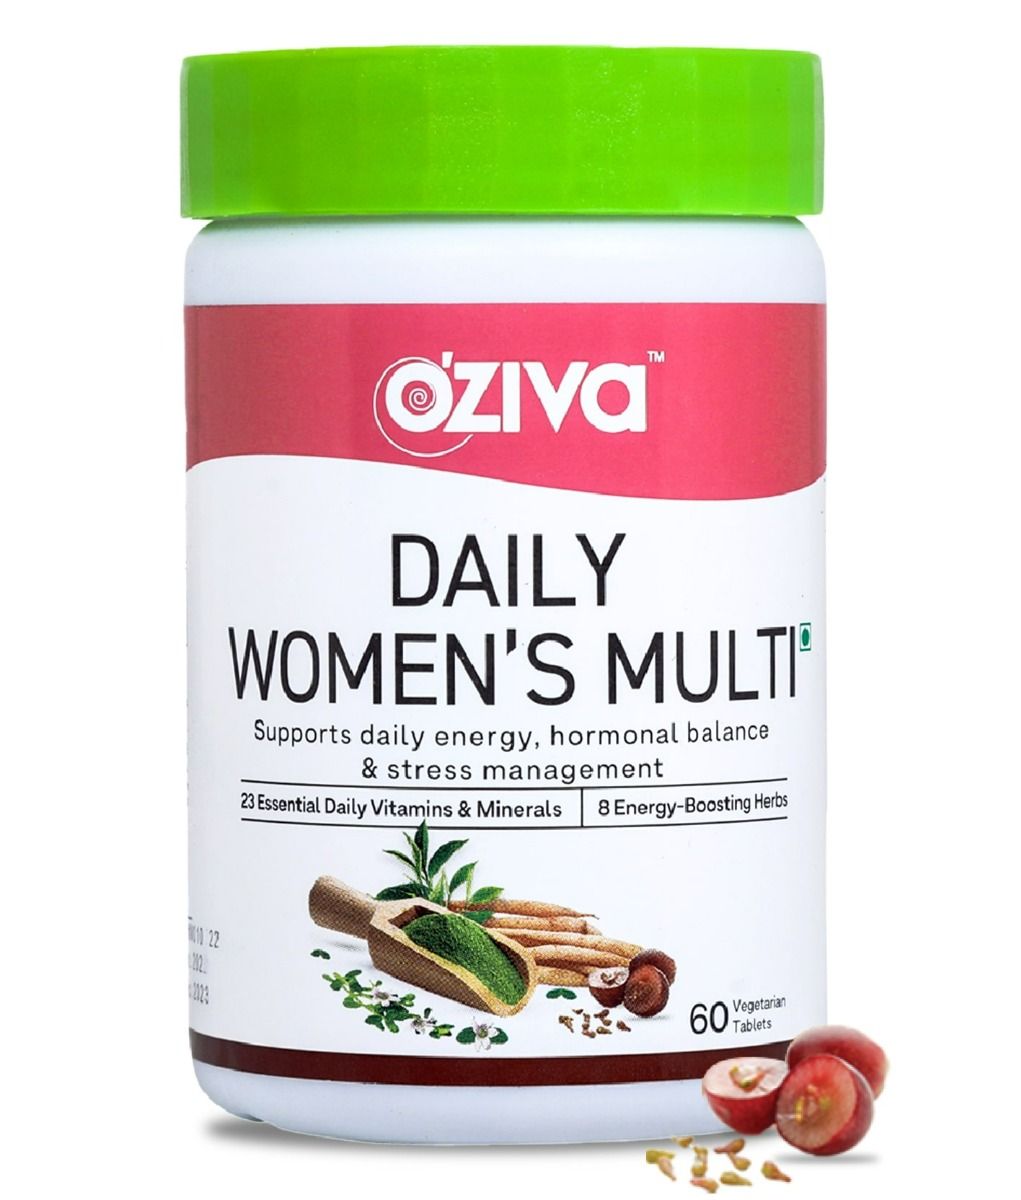 Buy Oziva Daily Women's Multi, 60 Tablets Online